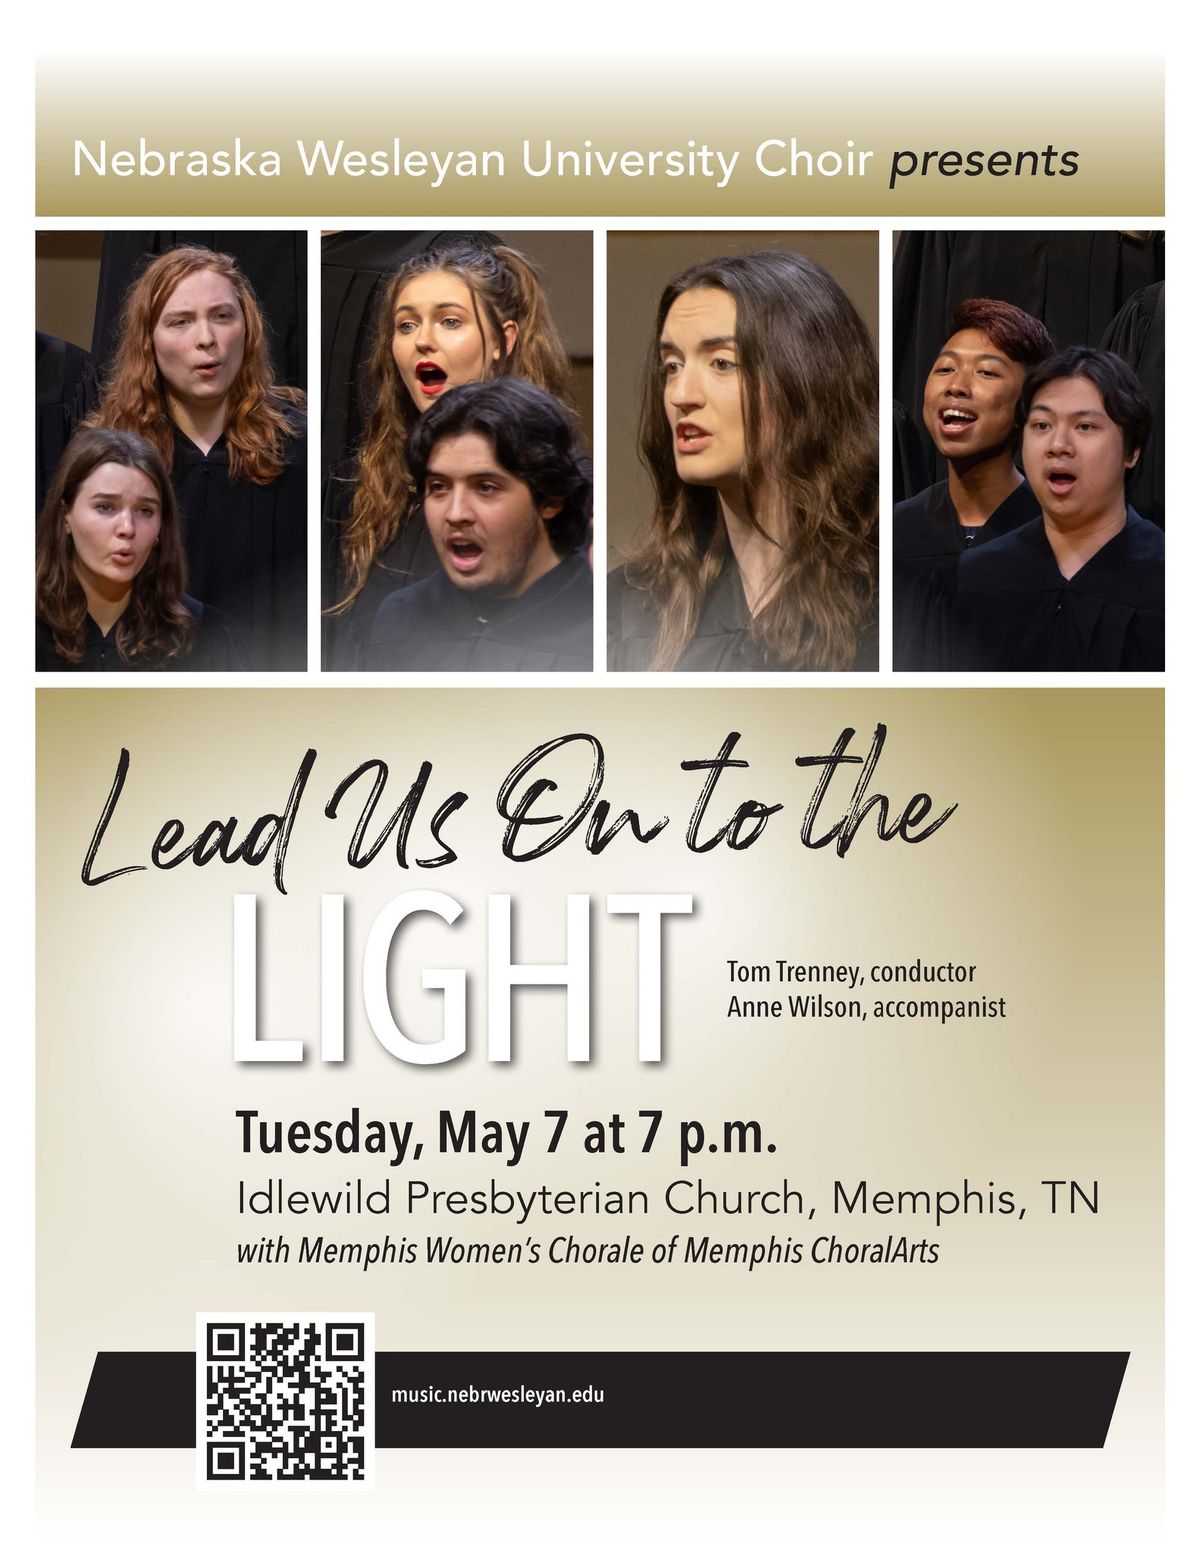 Nebraska Wesleyan University Choir Presents: Lead Us On to the Light